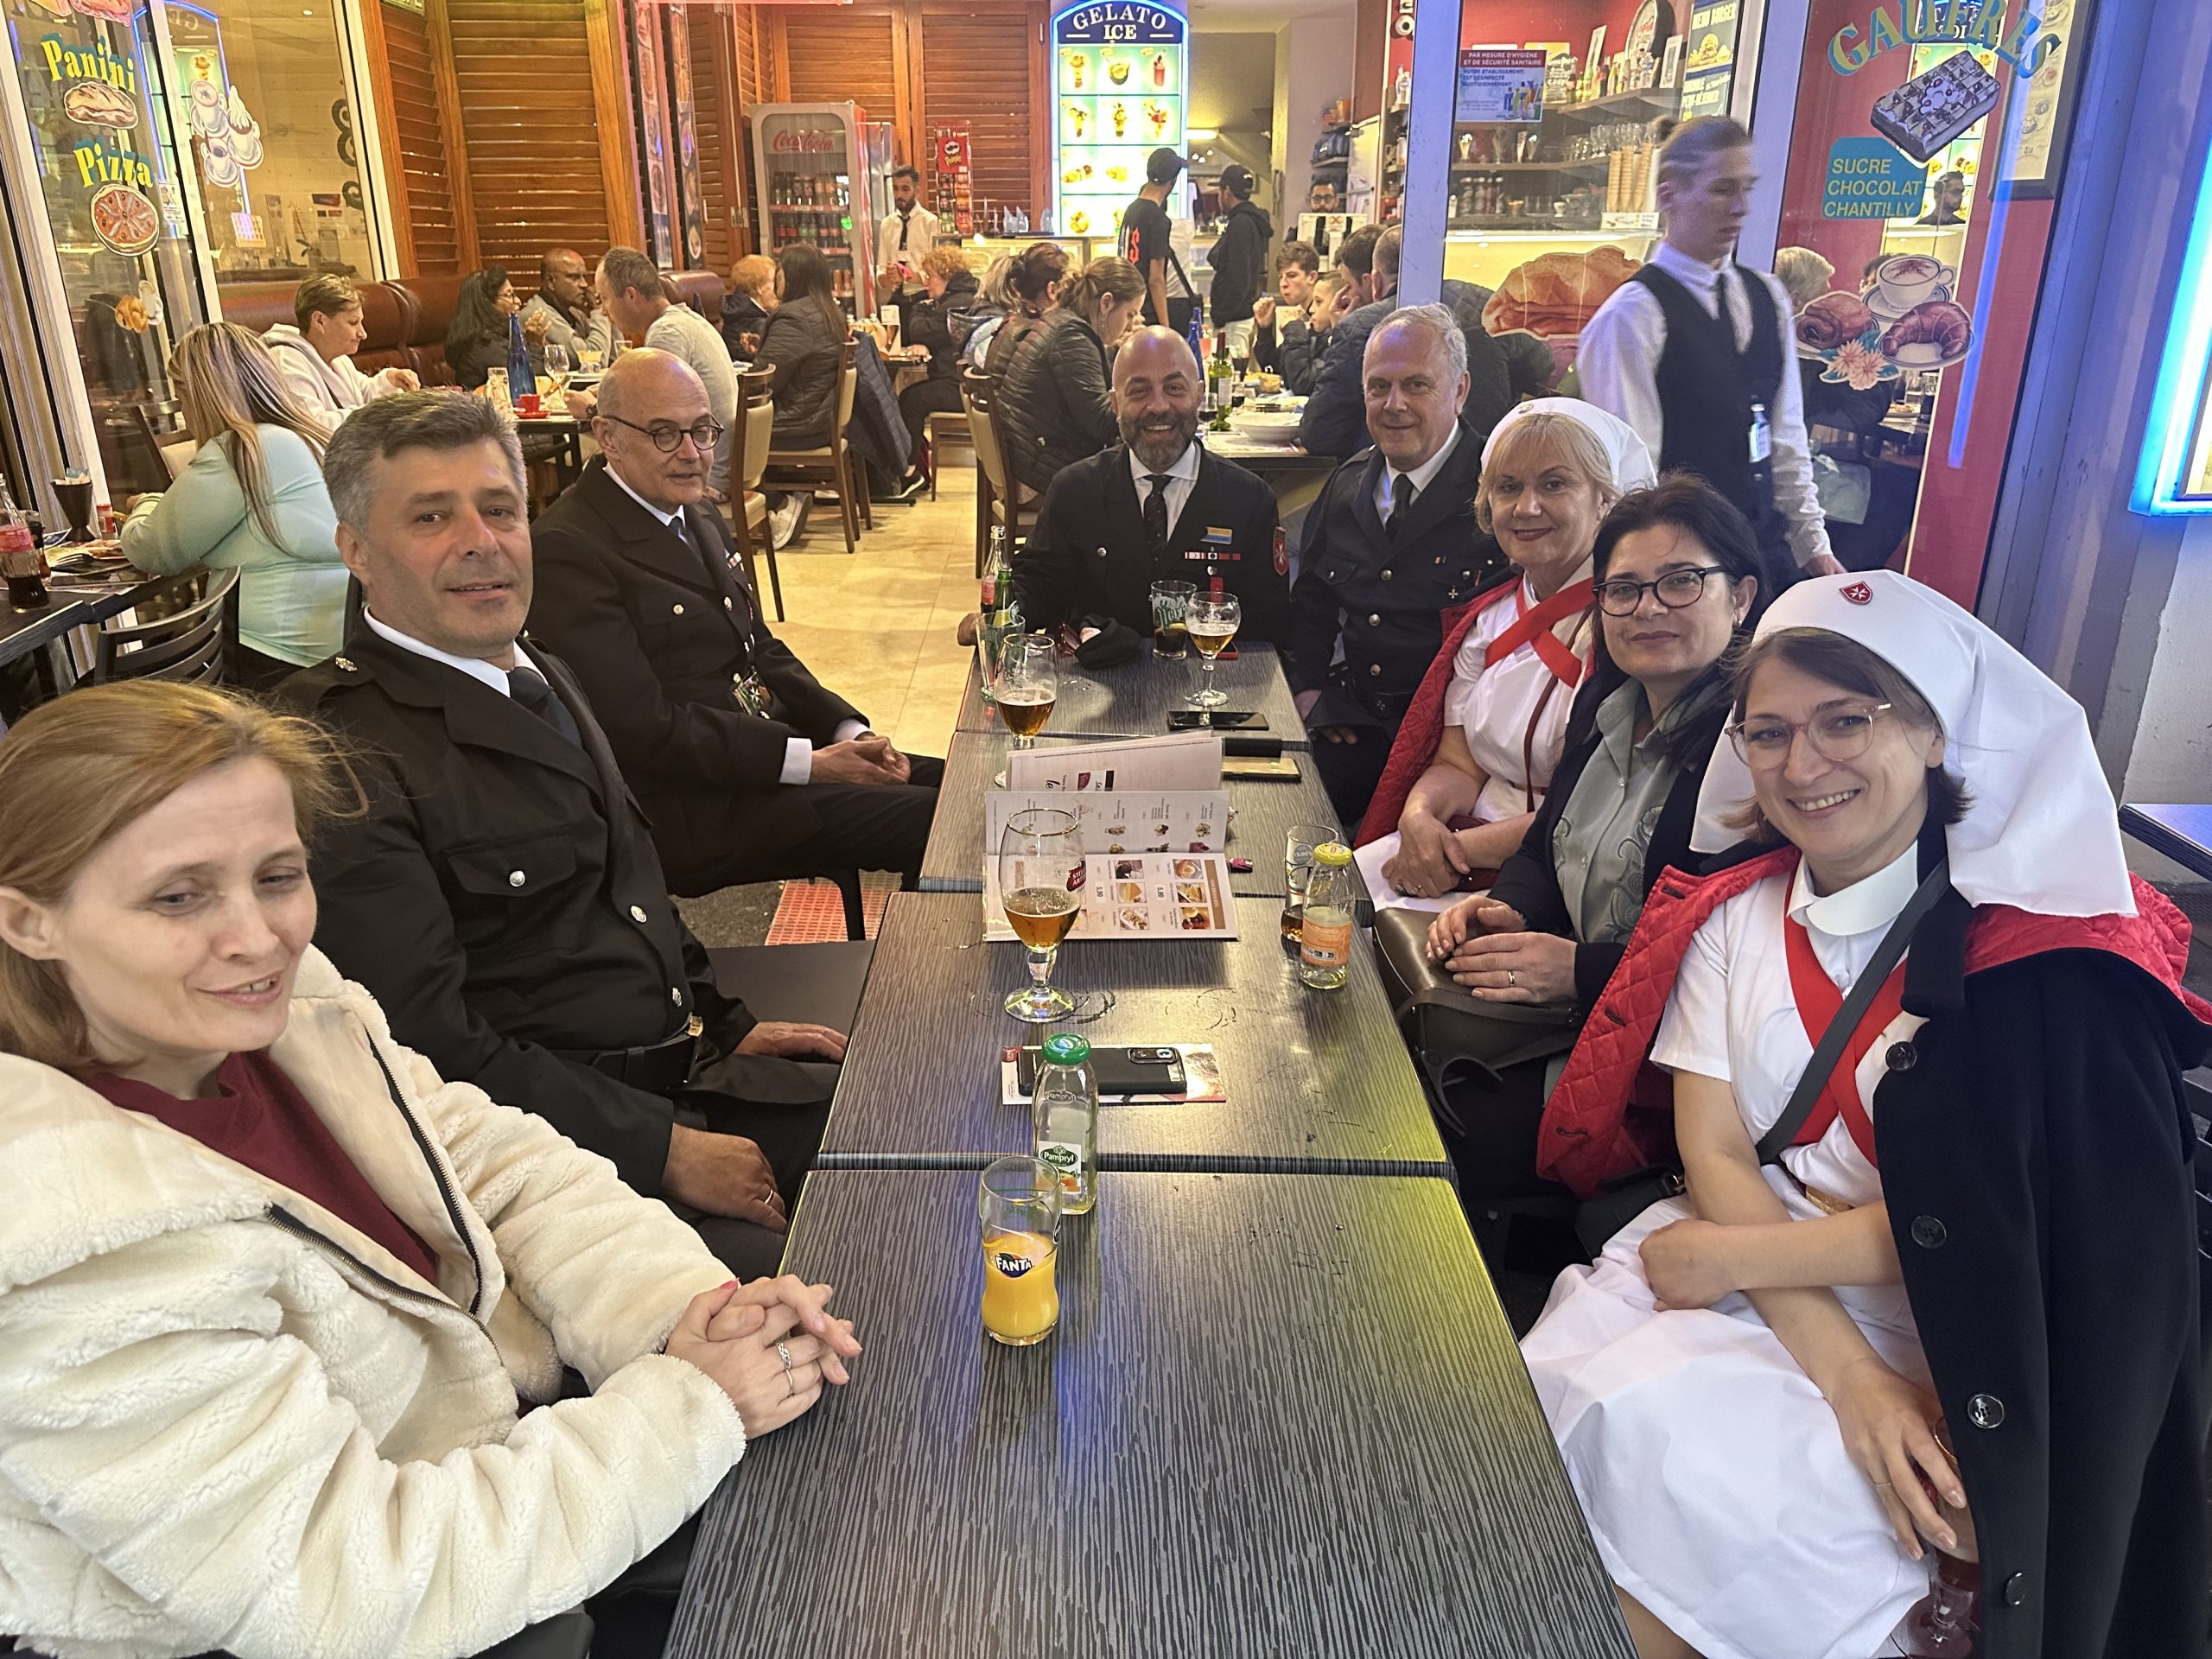 65th international pilgrimage to Lourdes, led by Grand Master Fra’ John Dunlap